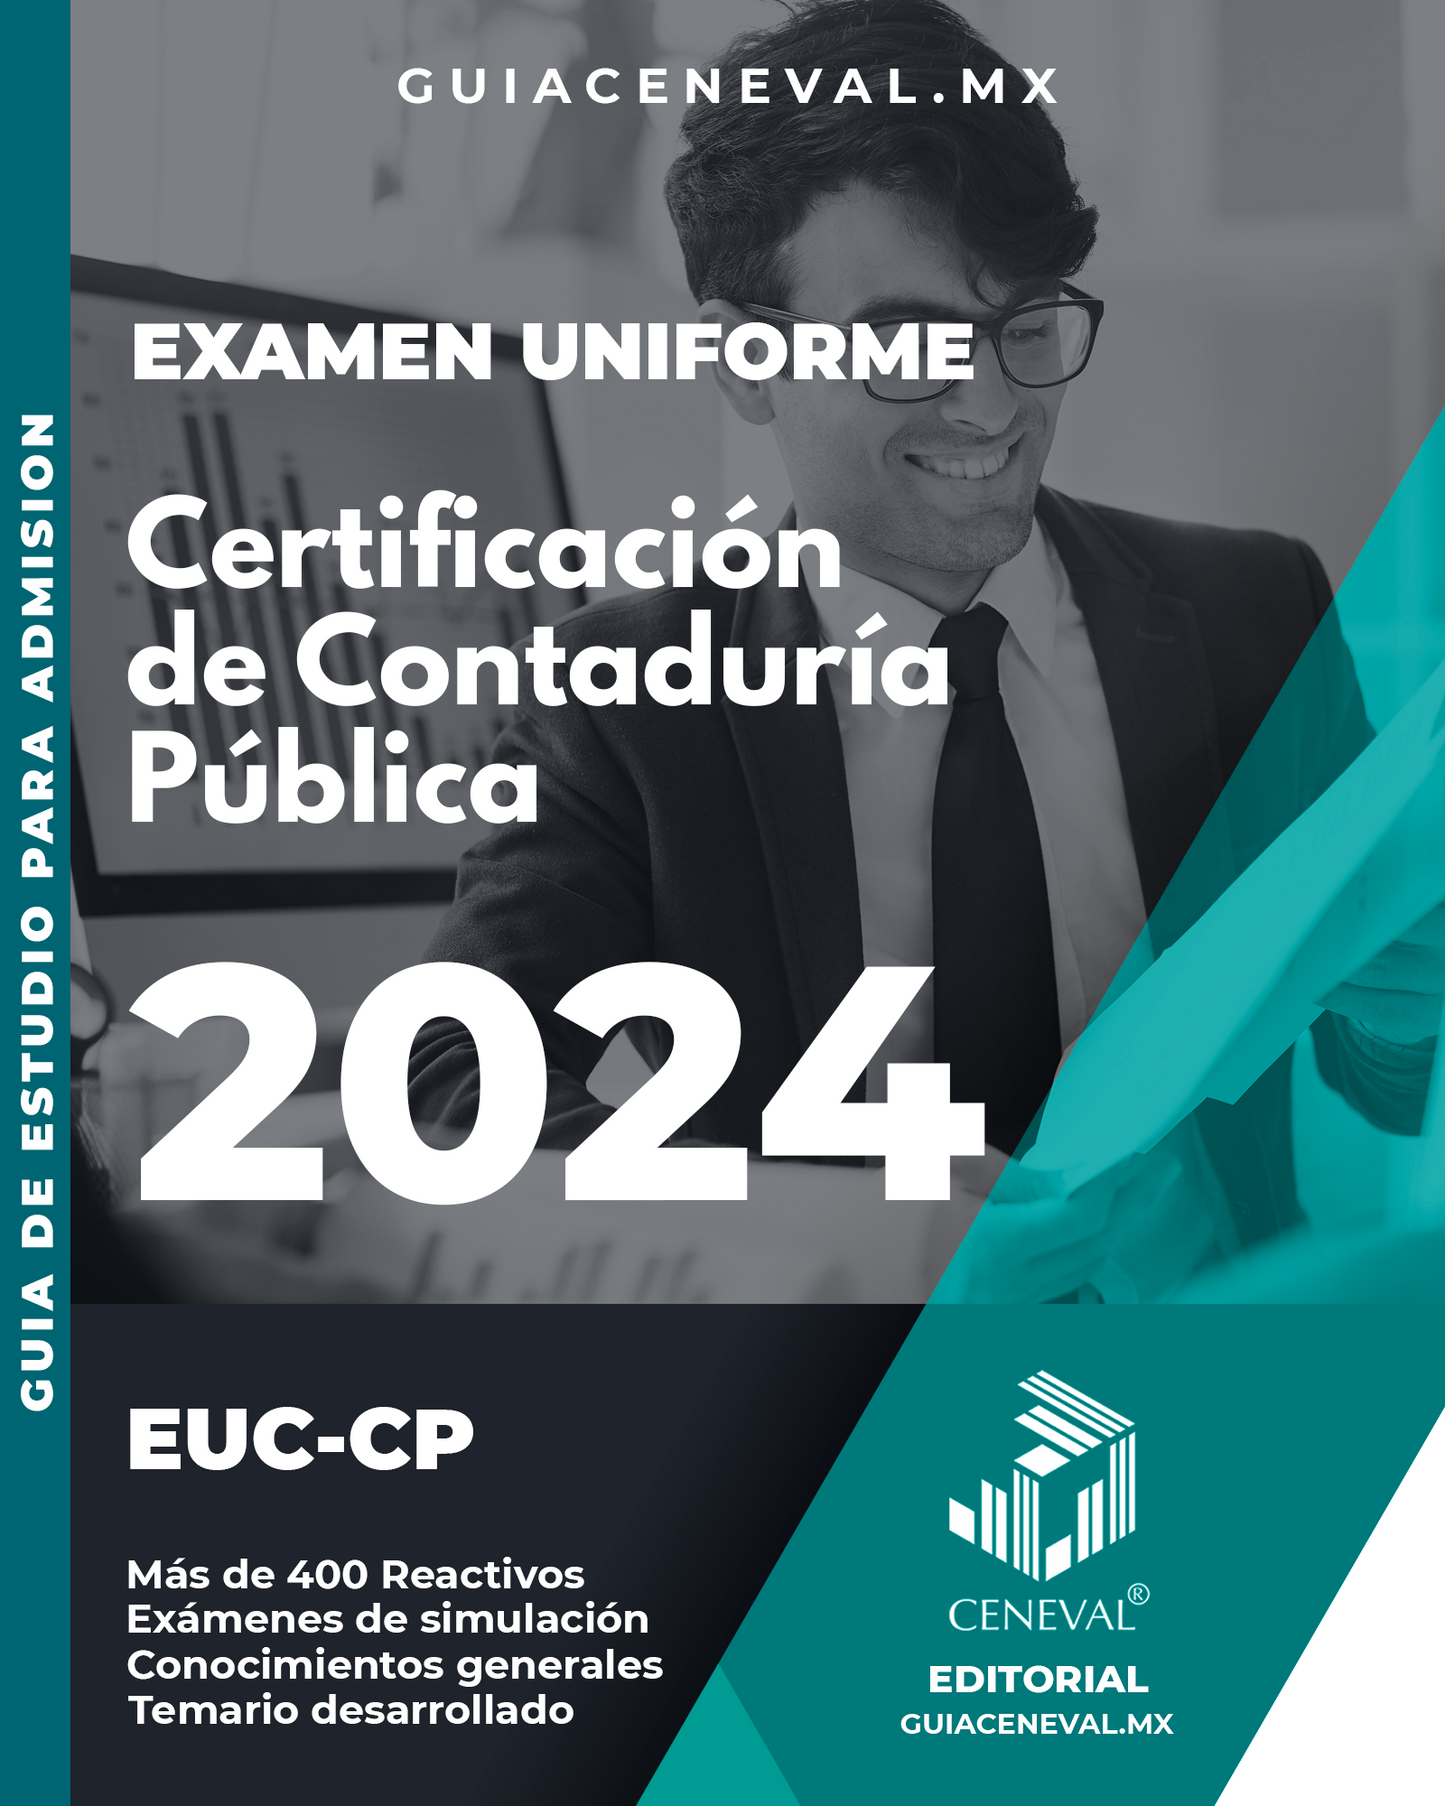 Guía Ceneval Examen Uniforme - Certificación de Contaduría Publica  EUC-CP